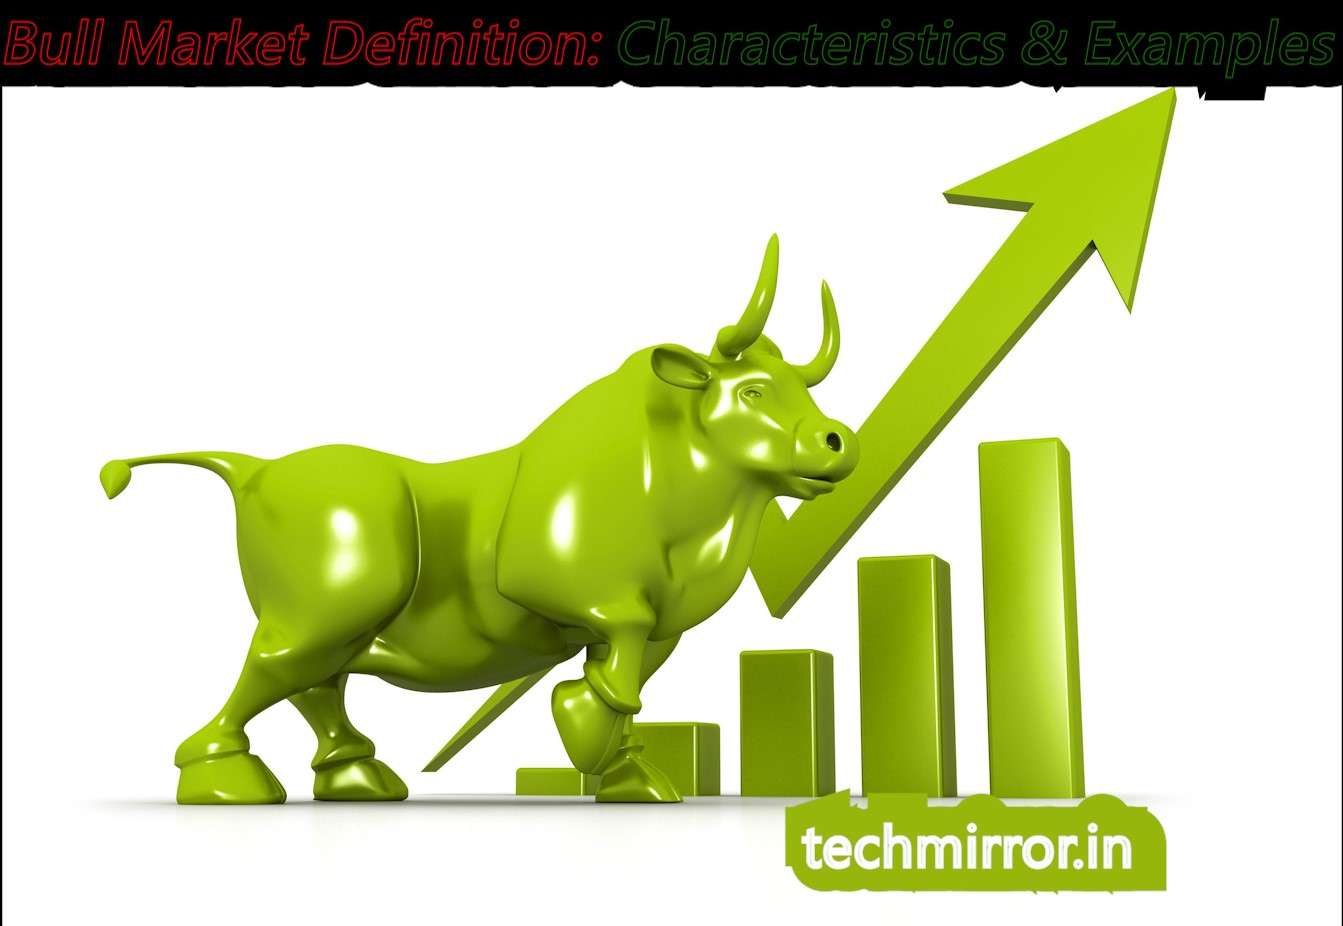 Bull Market Definition: Characteristics & Examples